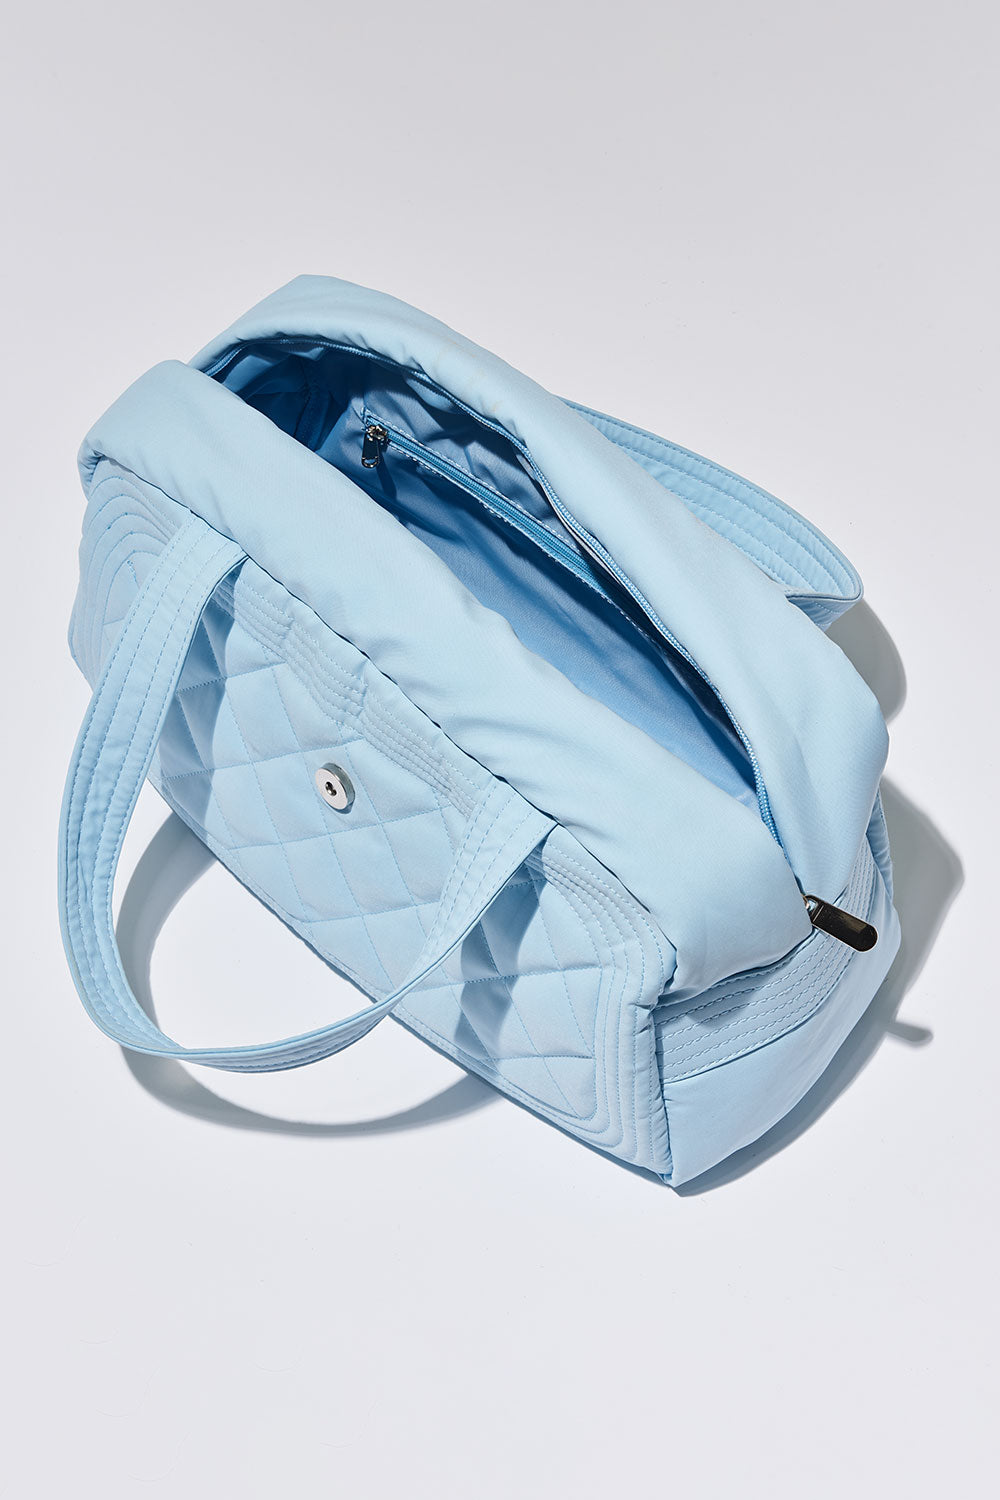 Venus Quilted Bag - Baby Blue